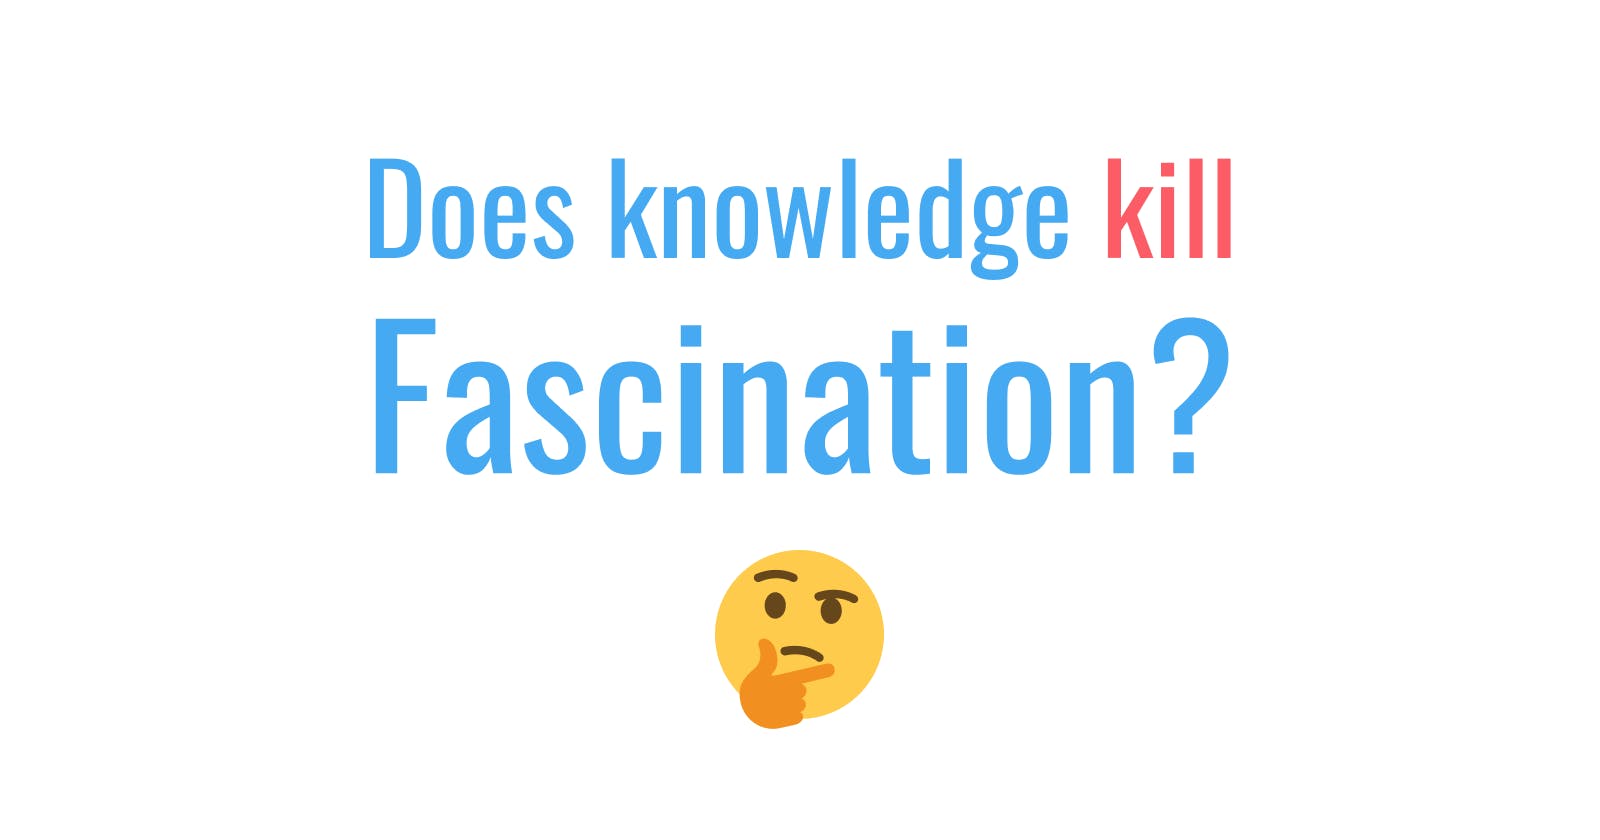 Does knowledge kill facination?